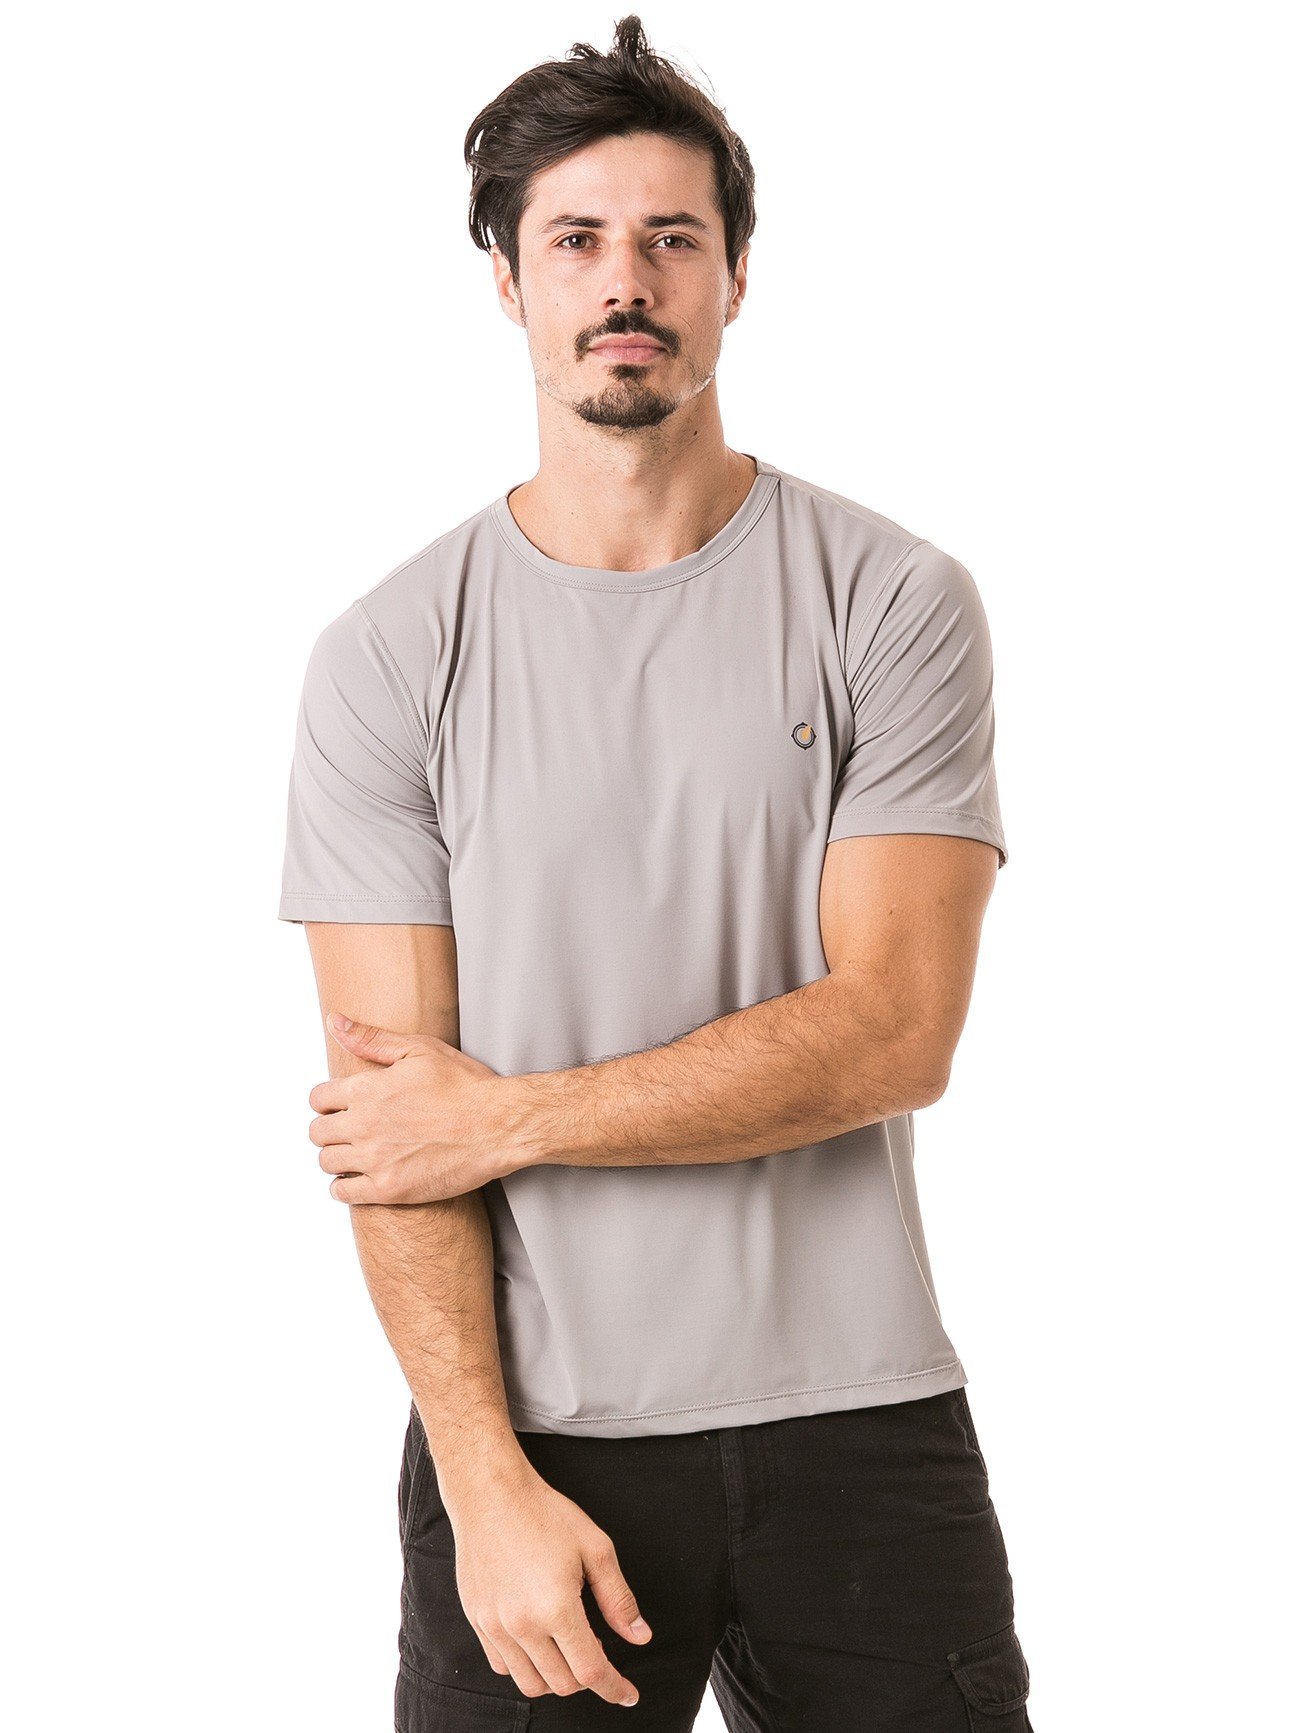 masculina t shirt curta ice cinza frente 2 b